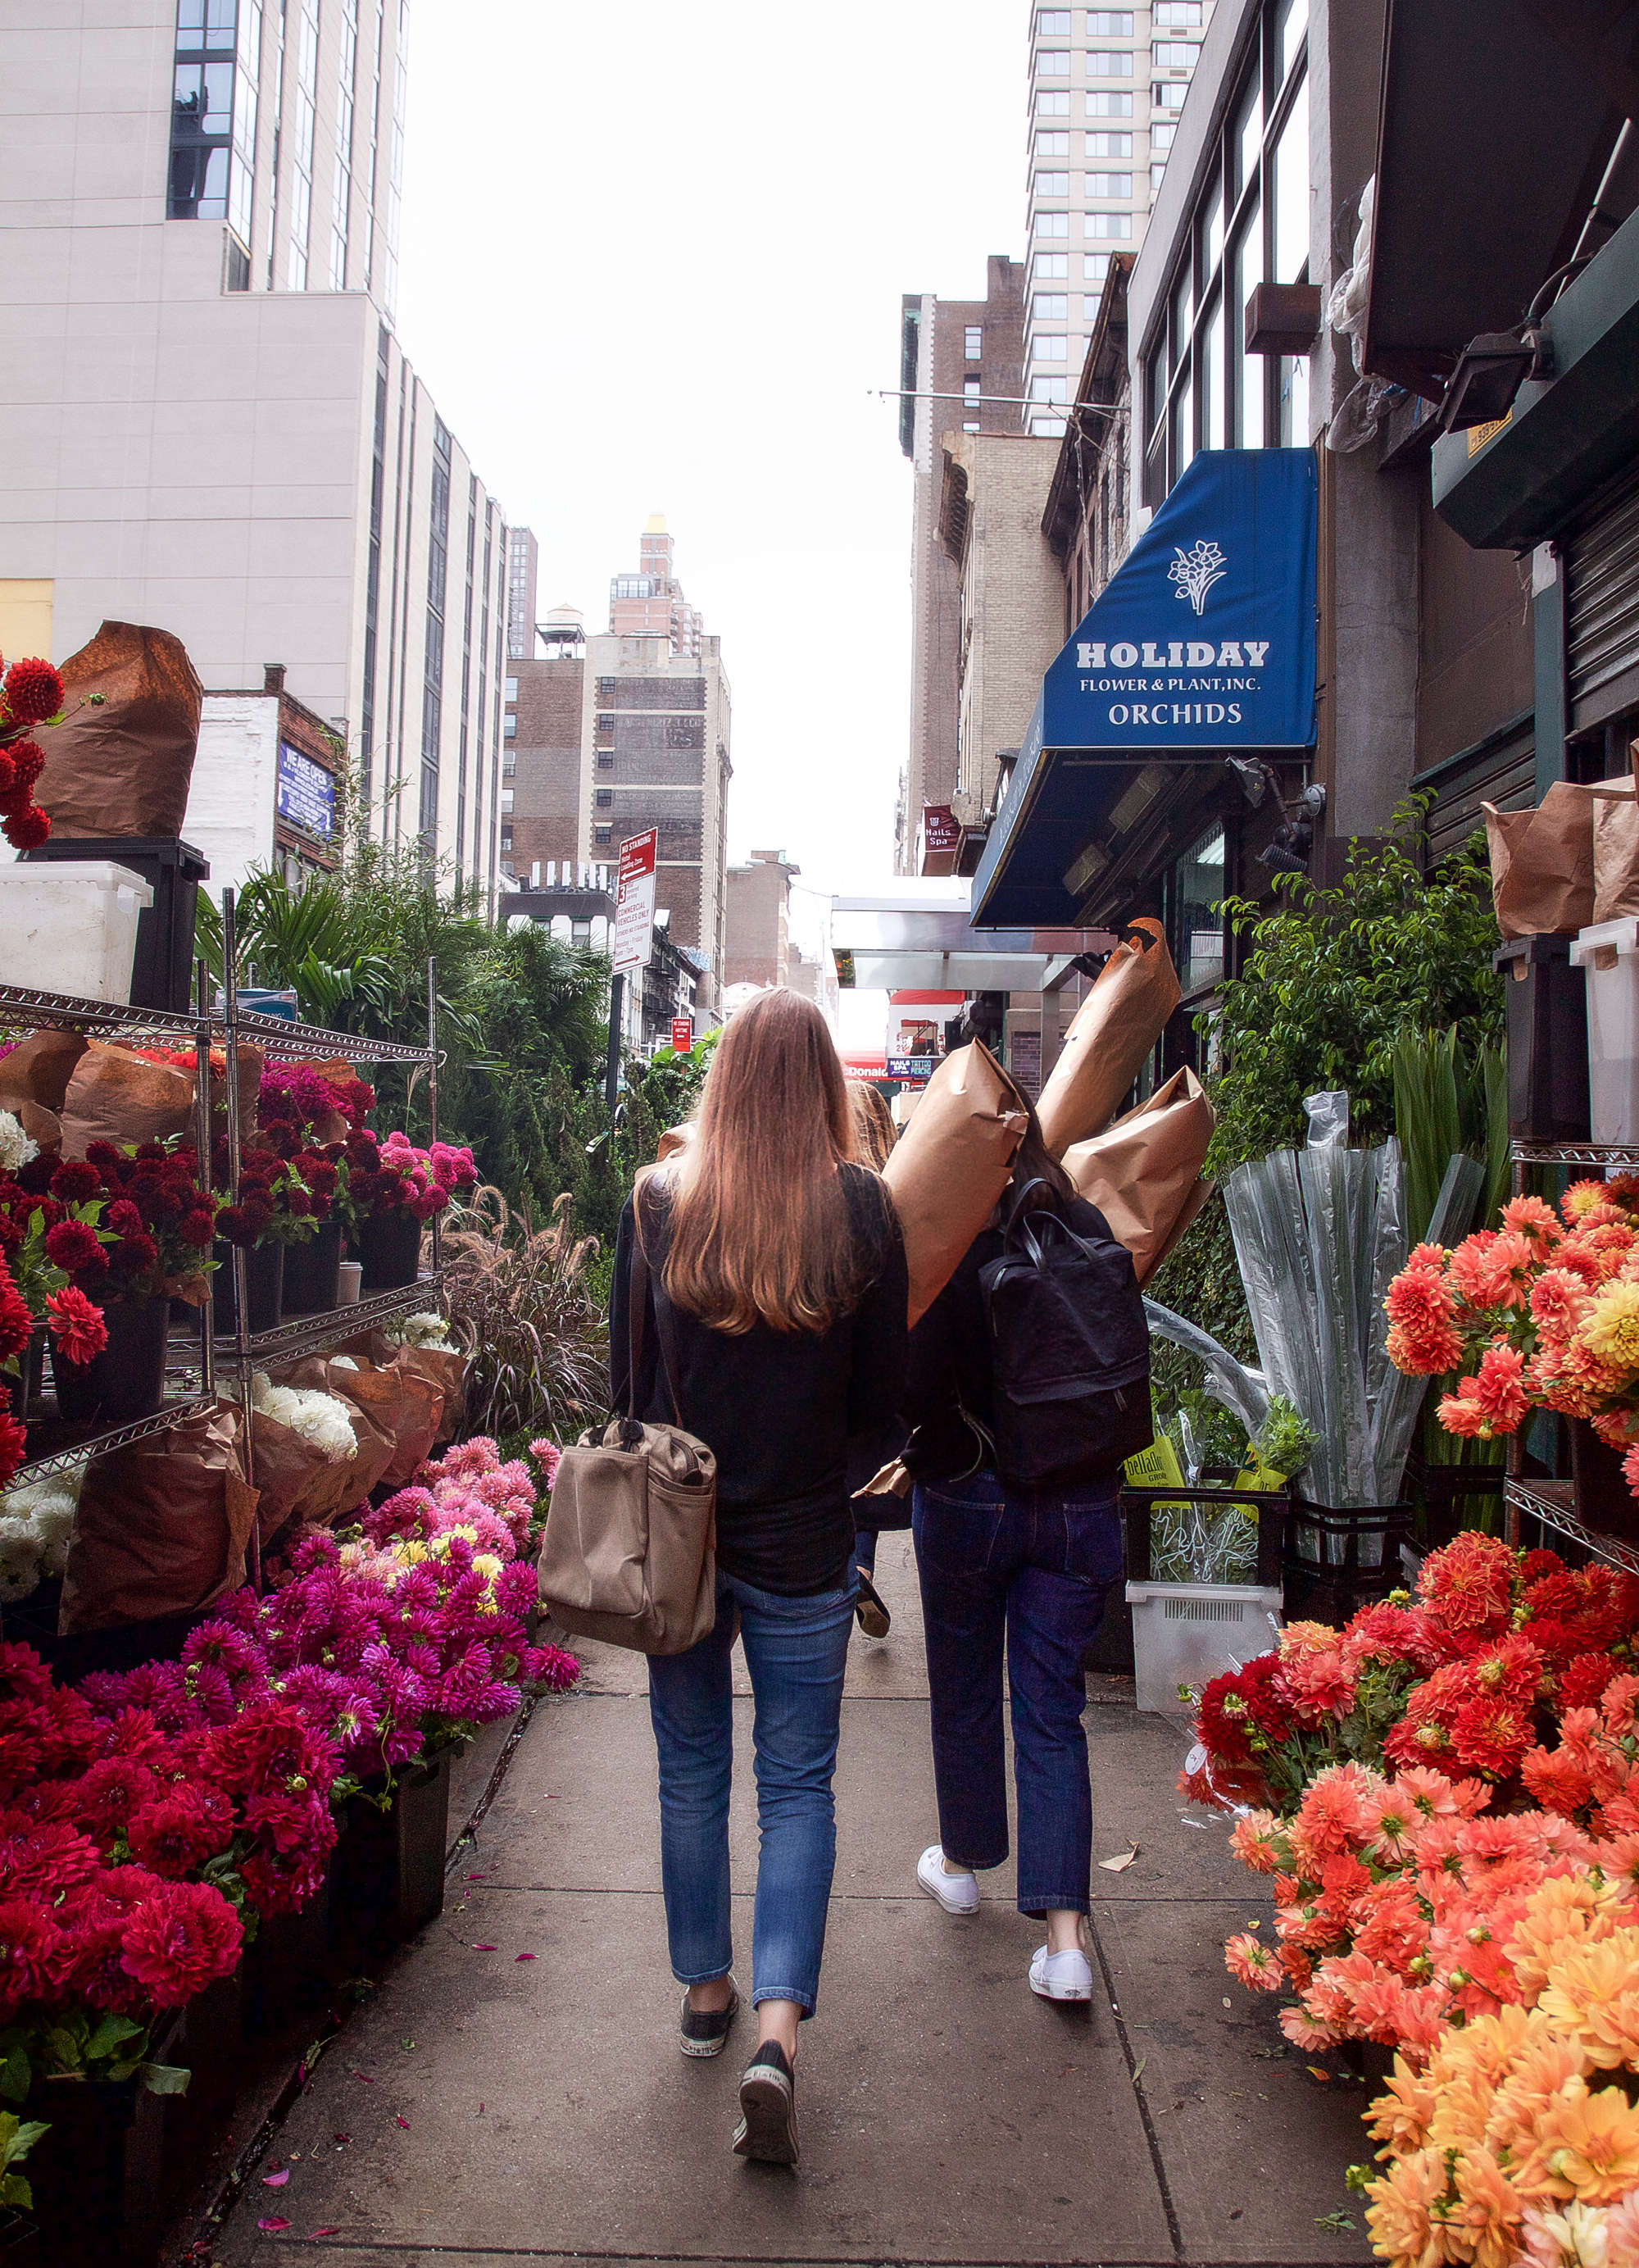 NYC flower market street image